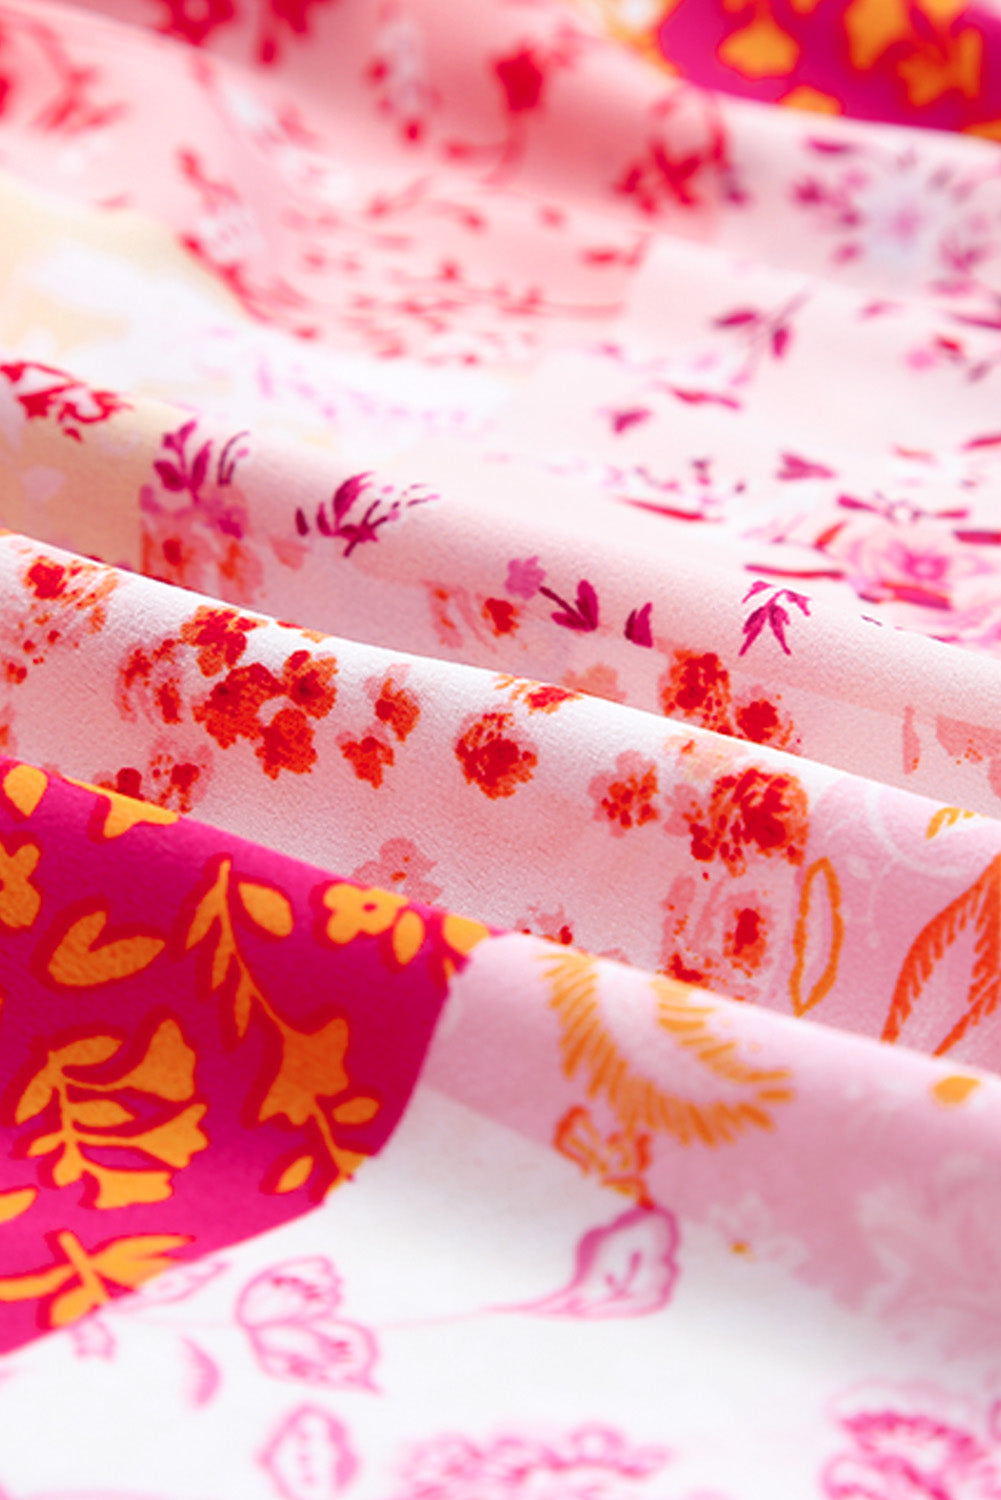 Multicolor Boho Geometric Floral Print Sleeveless Maxi Dress